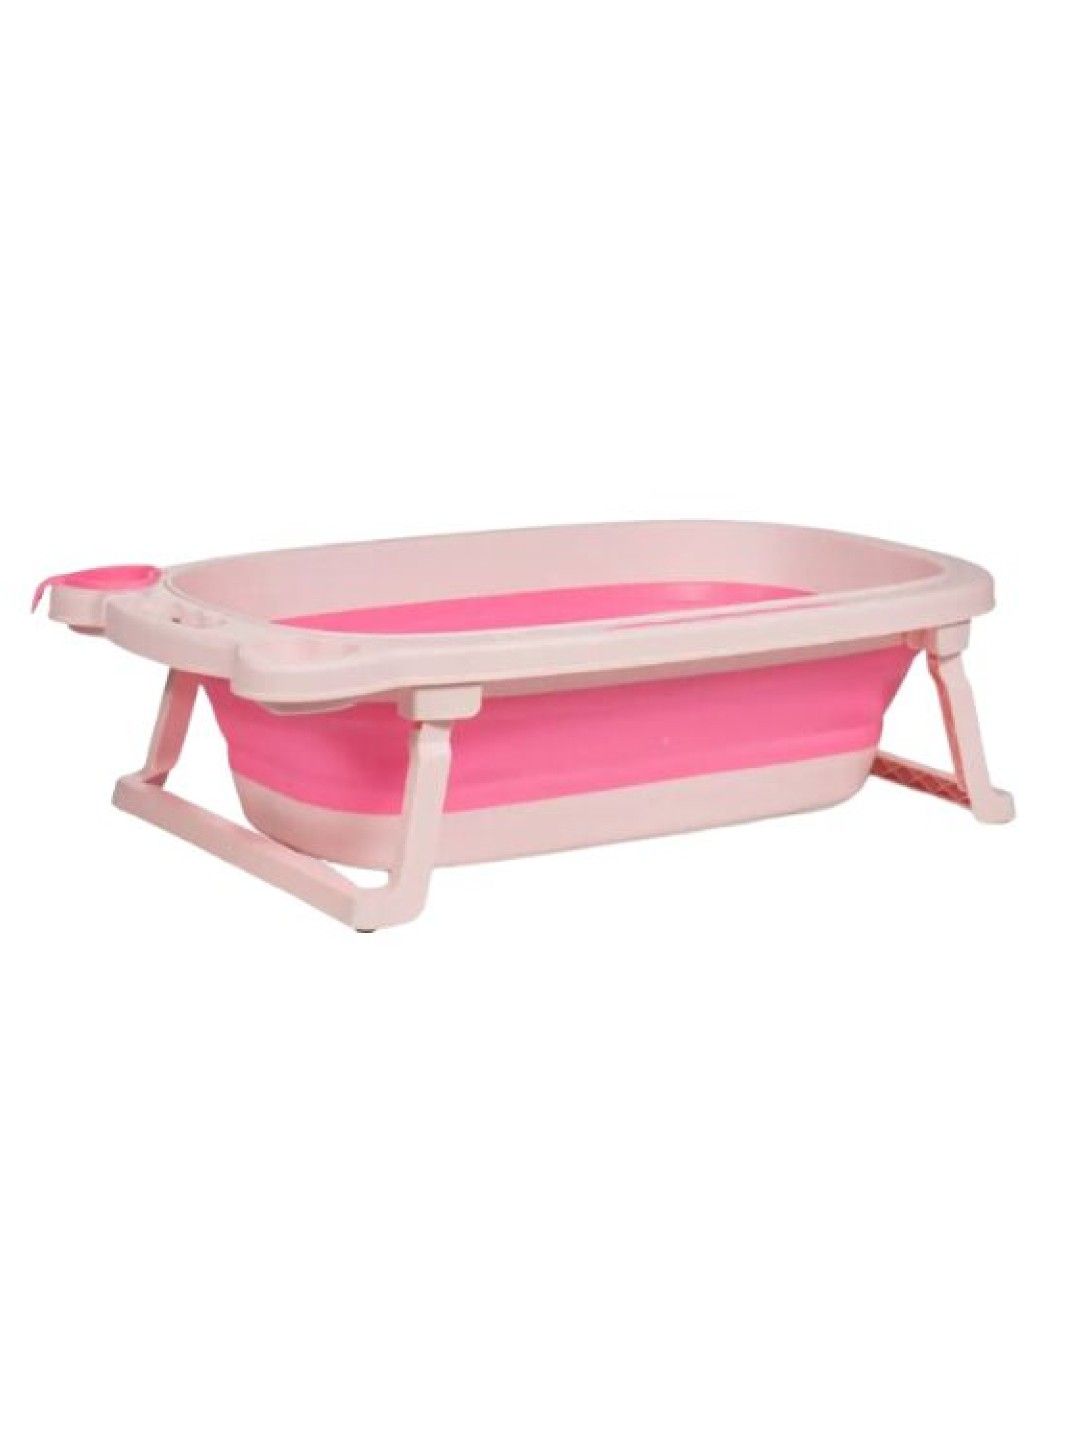 Juju Nursery Collapsible Baby to Toddler Bath Tub Set (Pink)